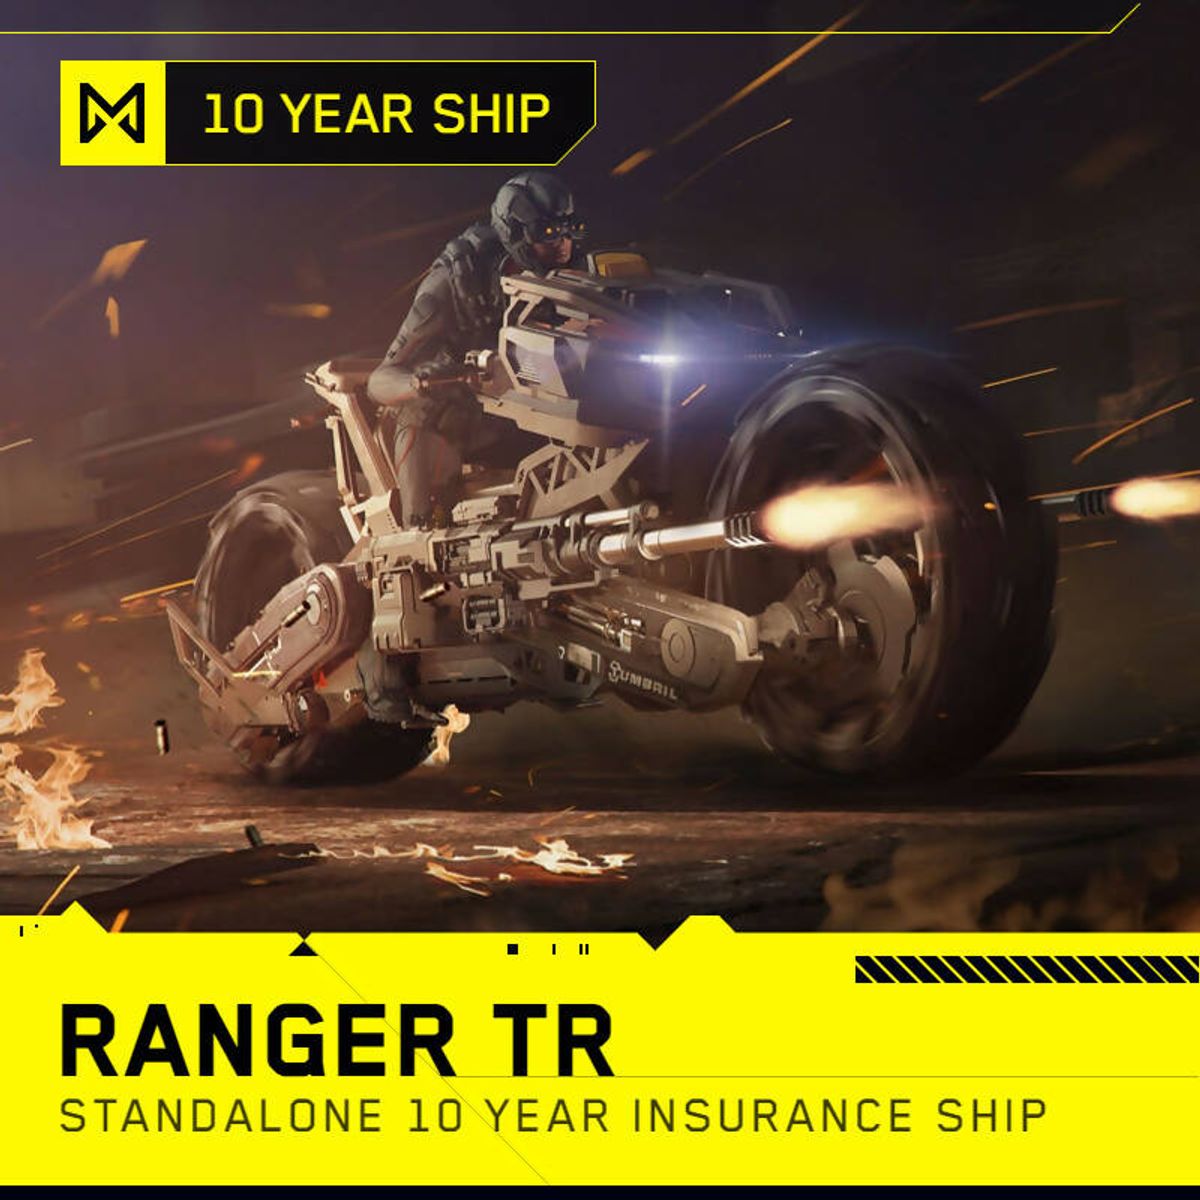 Ranger TR - 10 Year